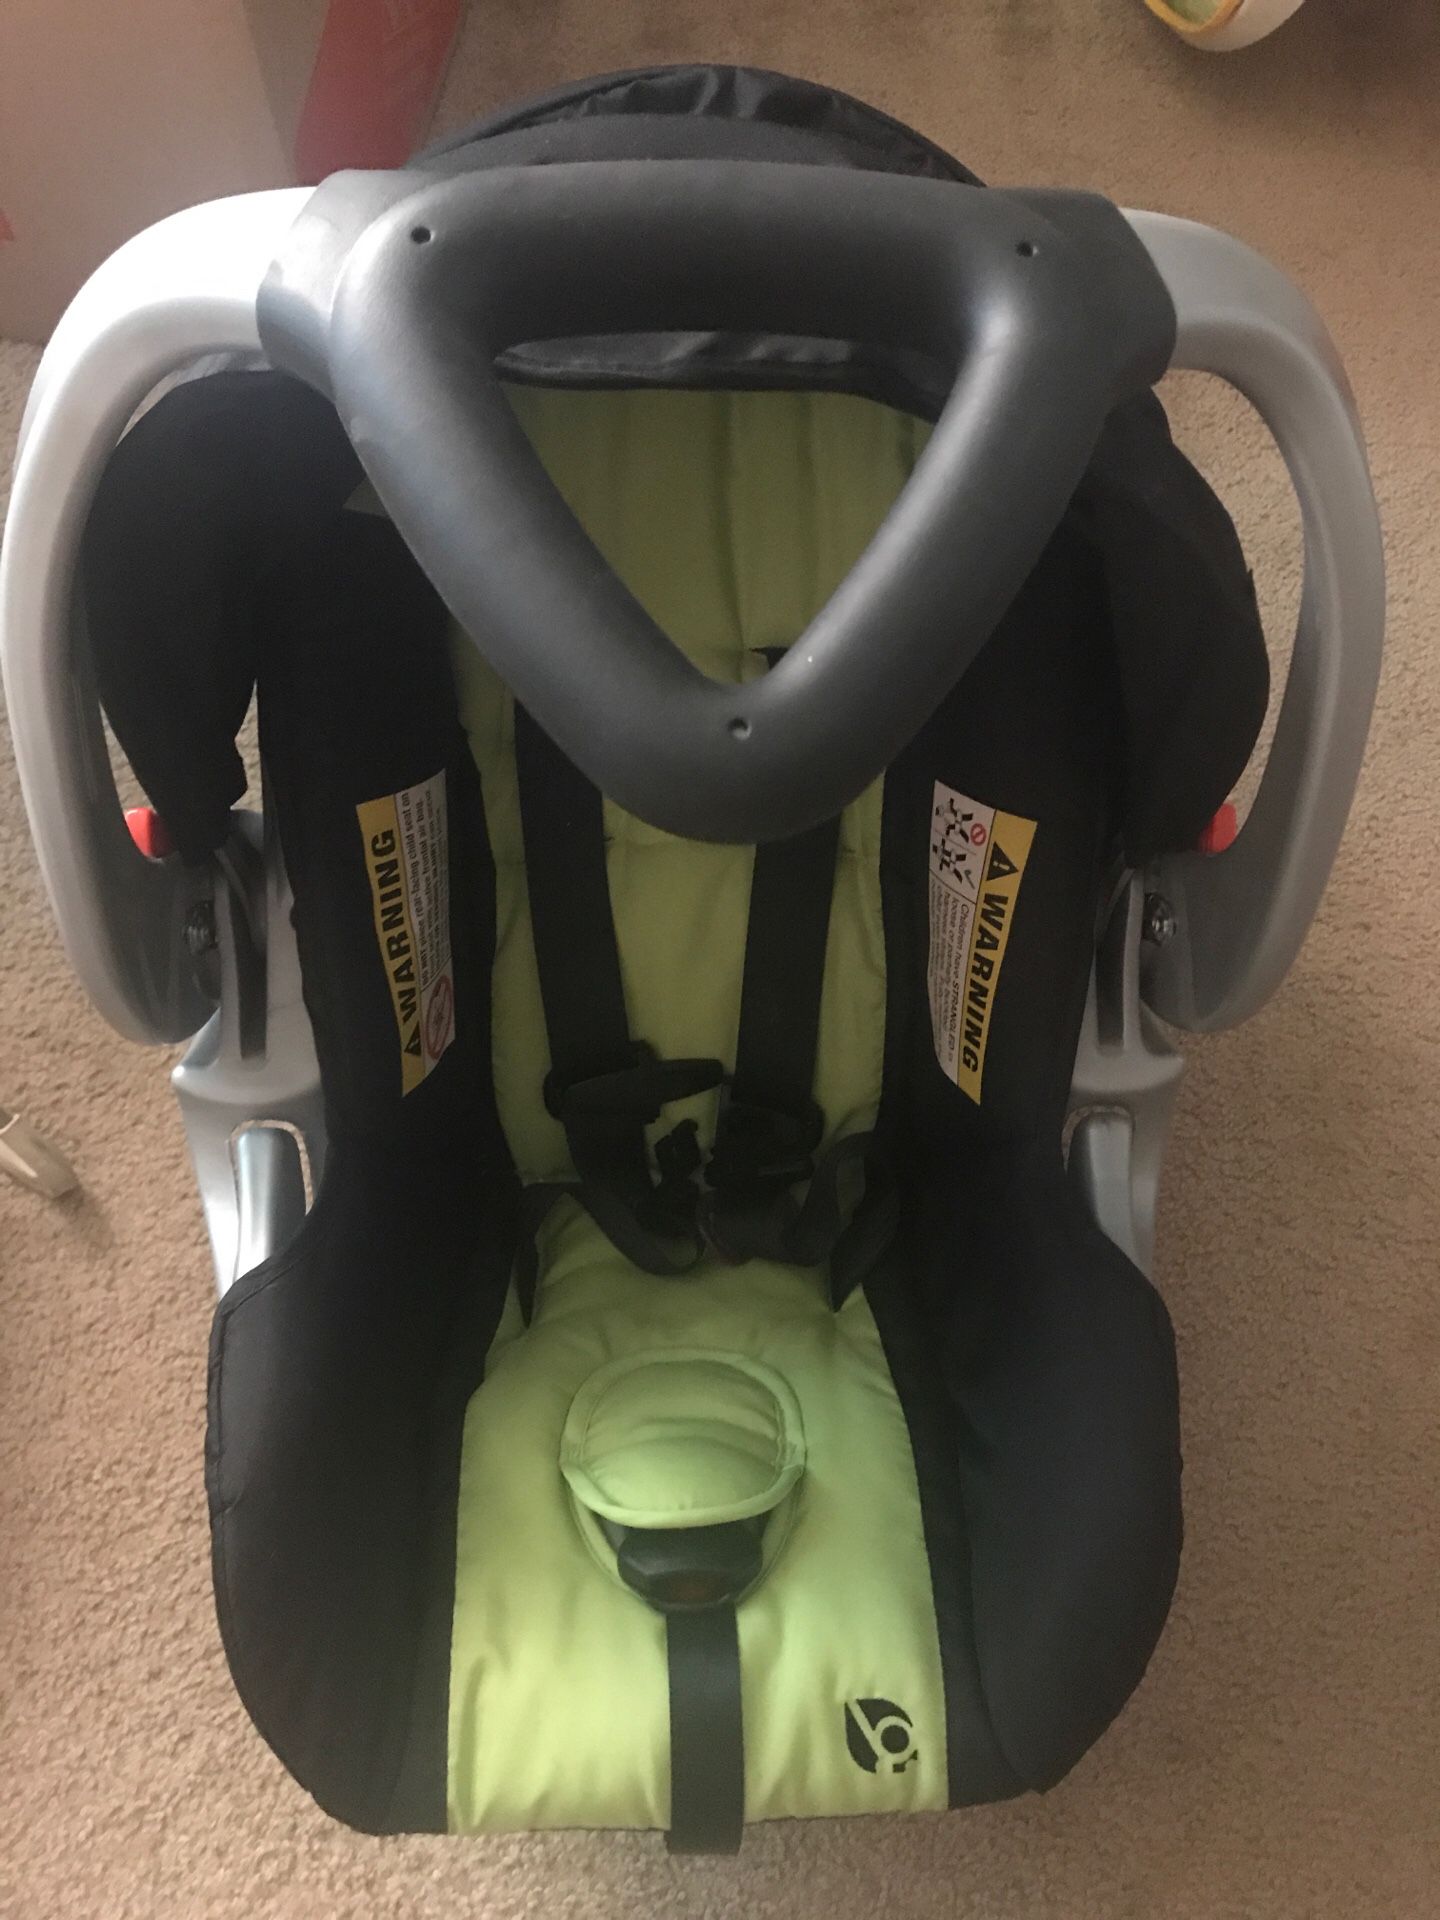 Babytrend EZ Loc Car seat